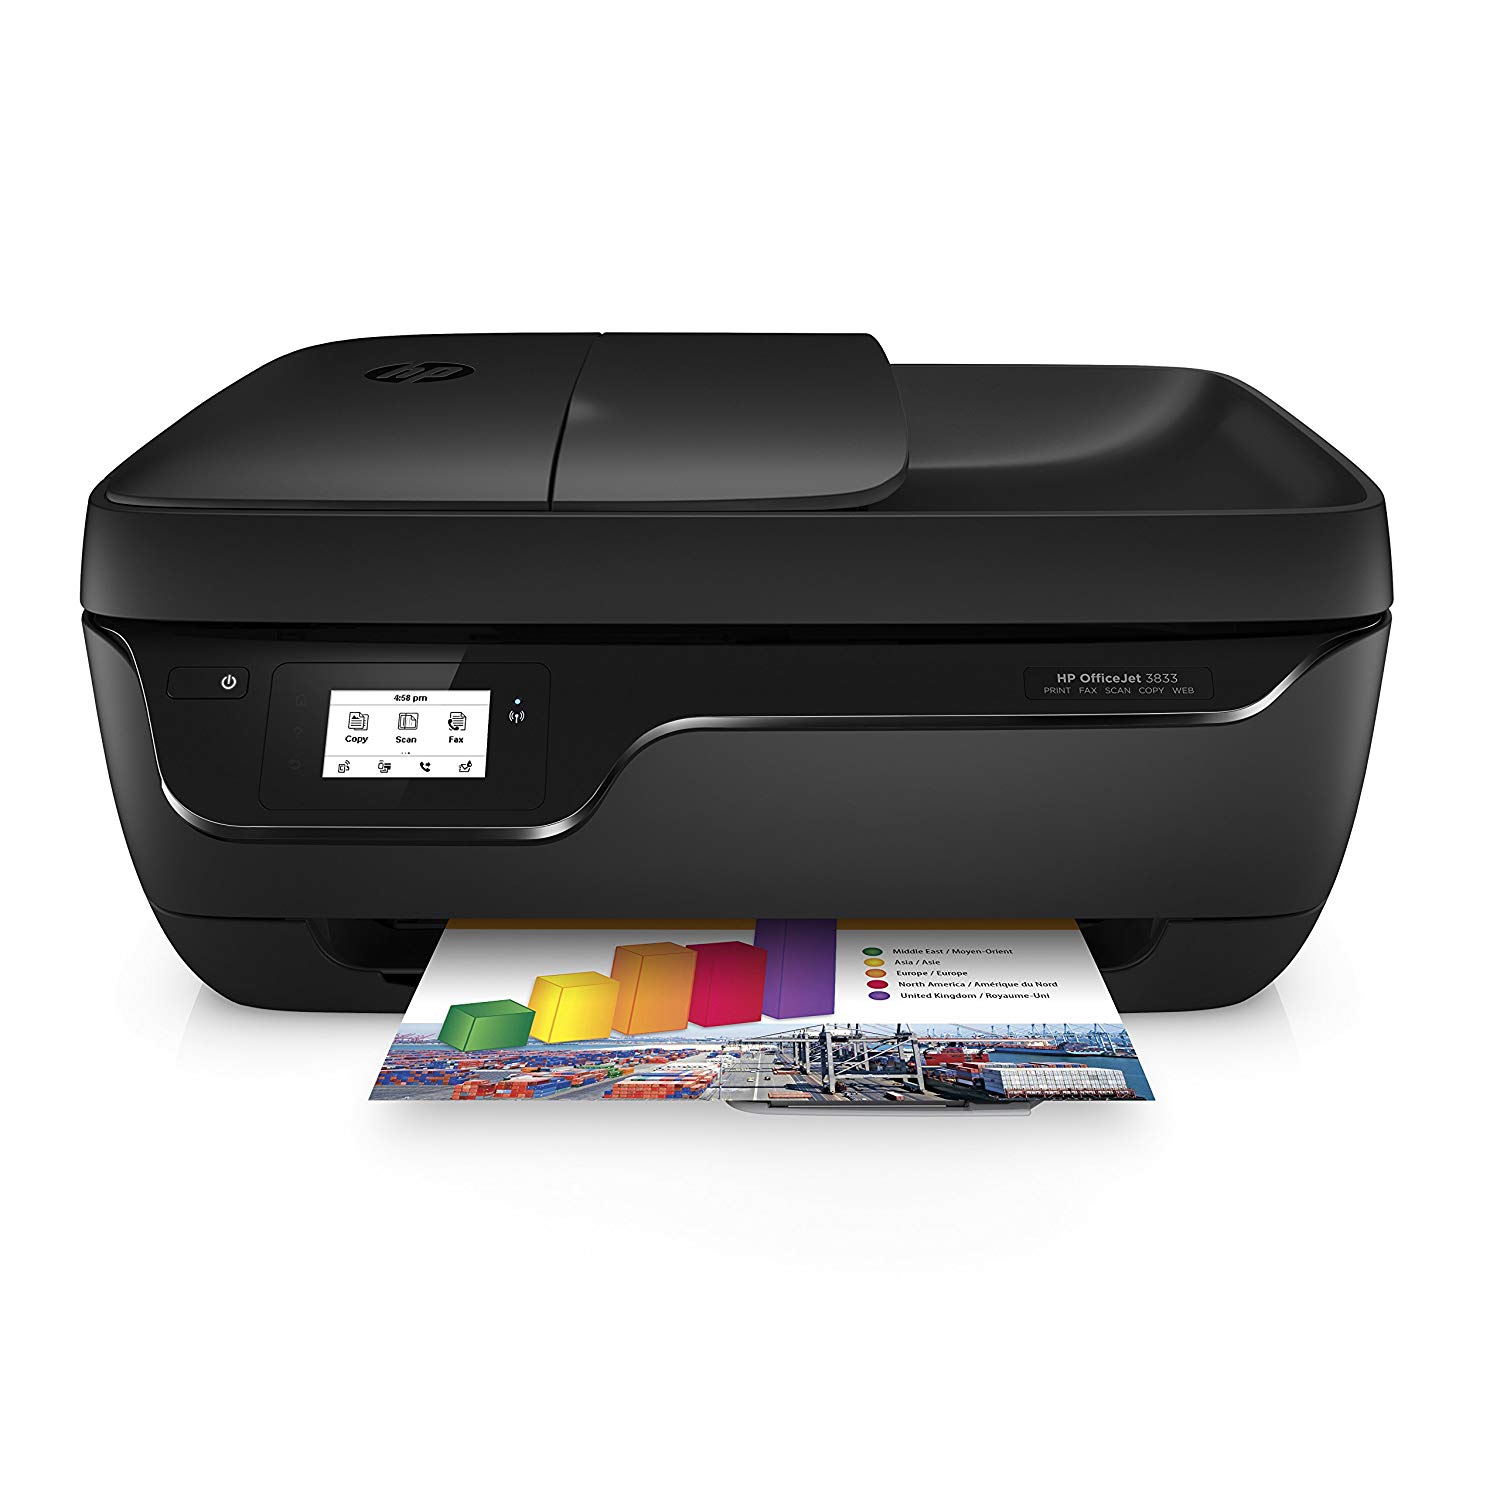 Impresora multifunción de tinta HP OfficeJet 3833